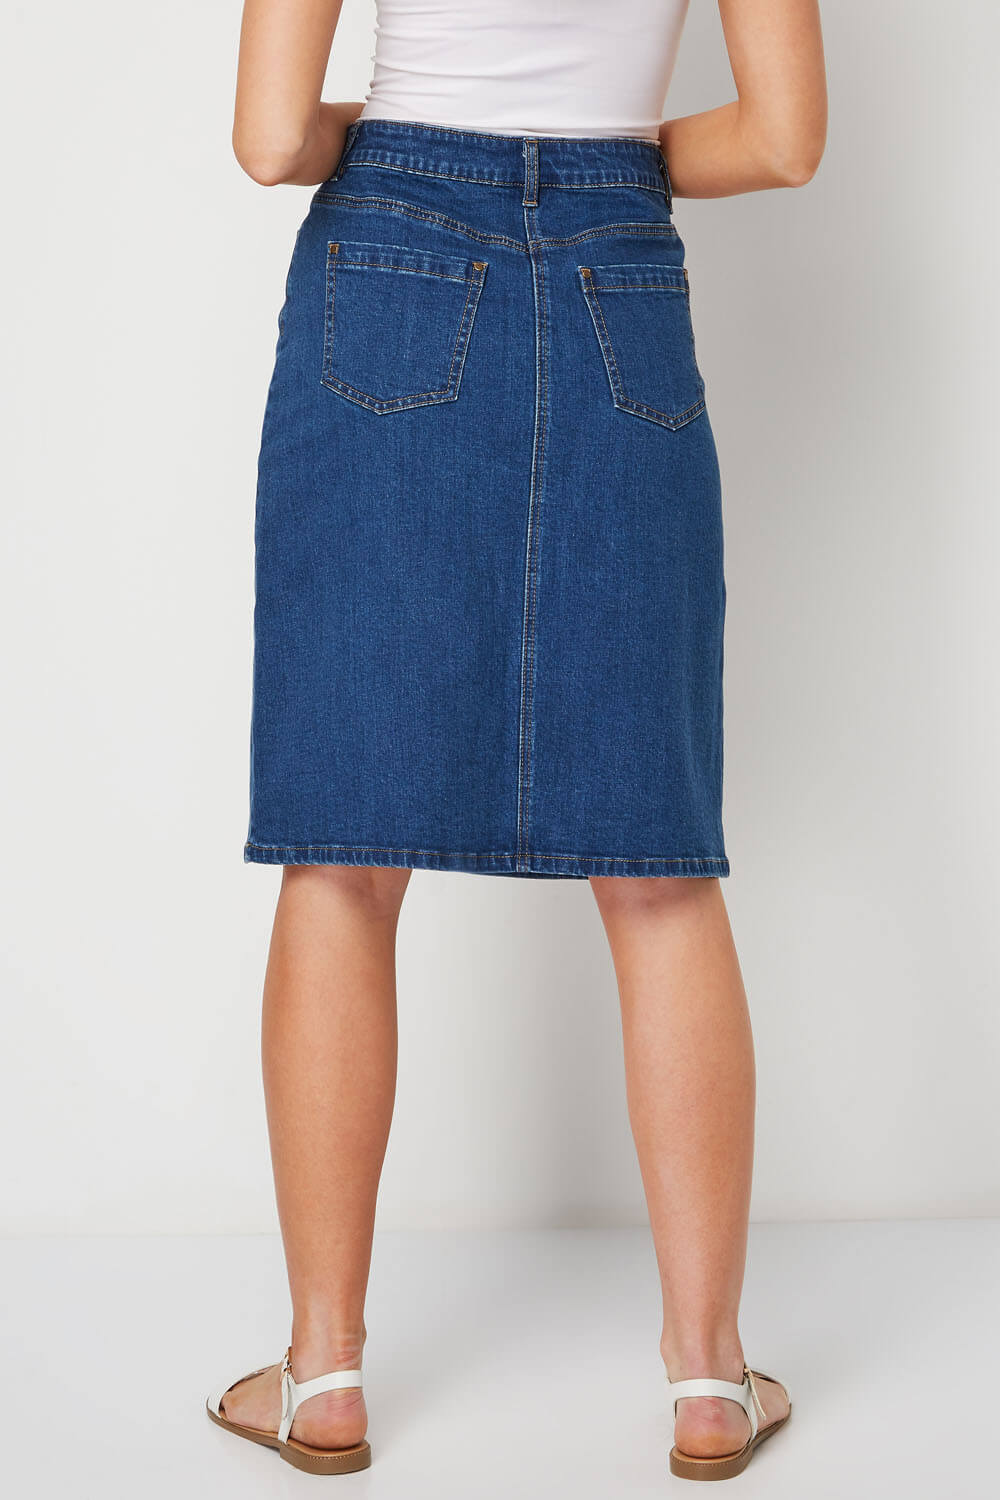 A-Line Denim Skirt in Blue - Roman Originals UK